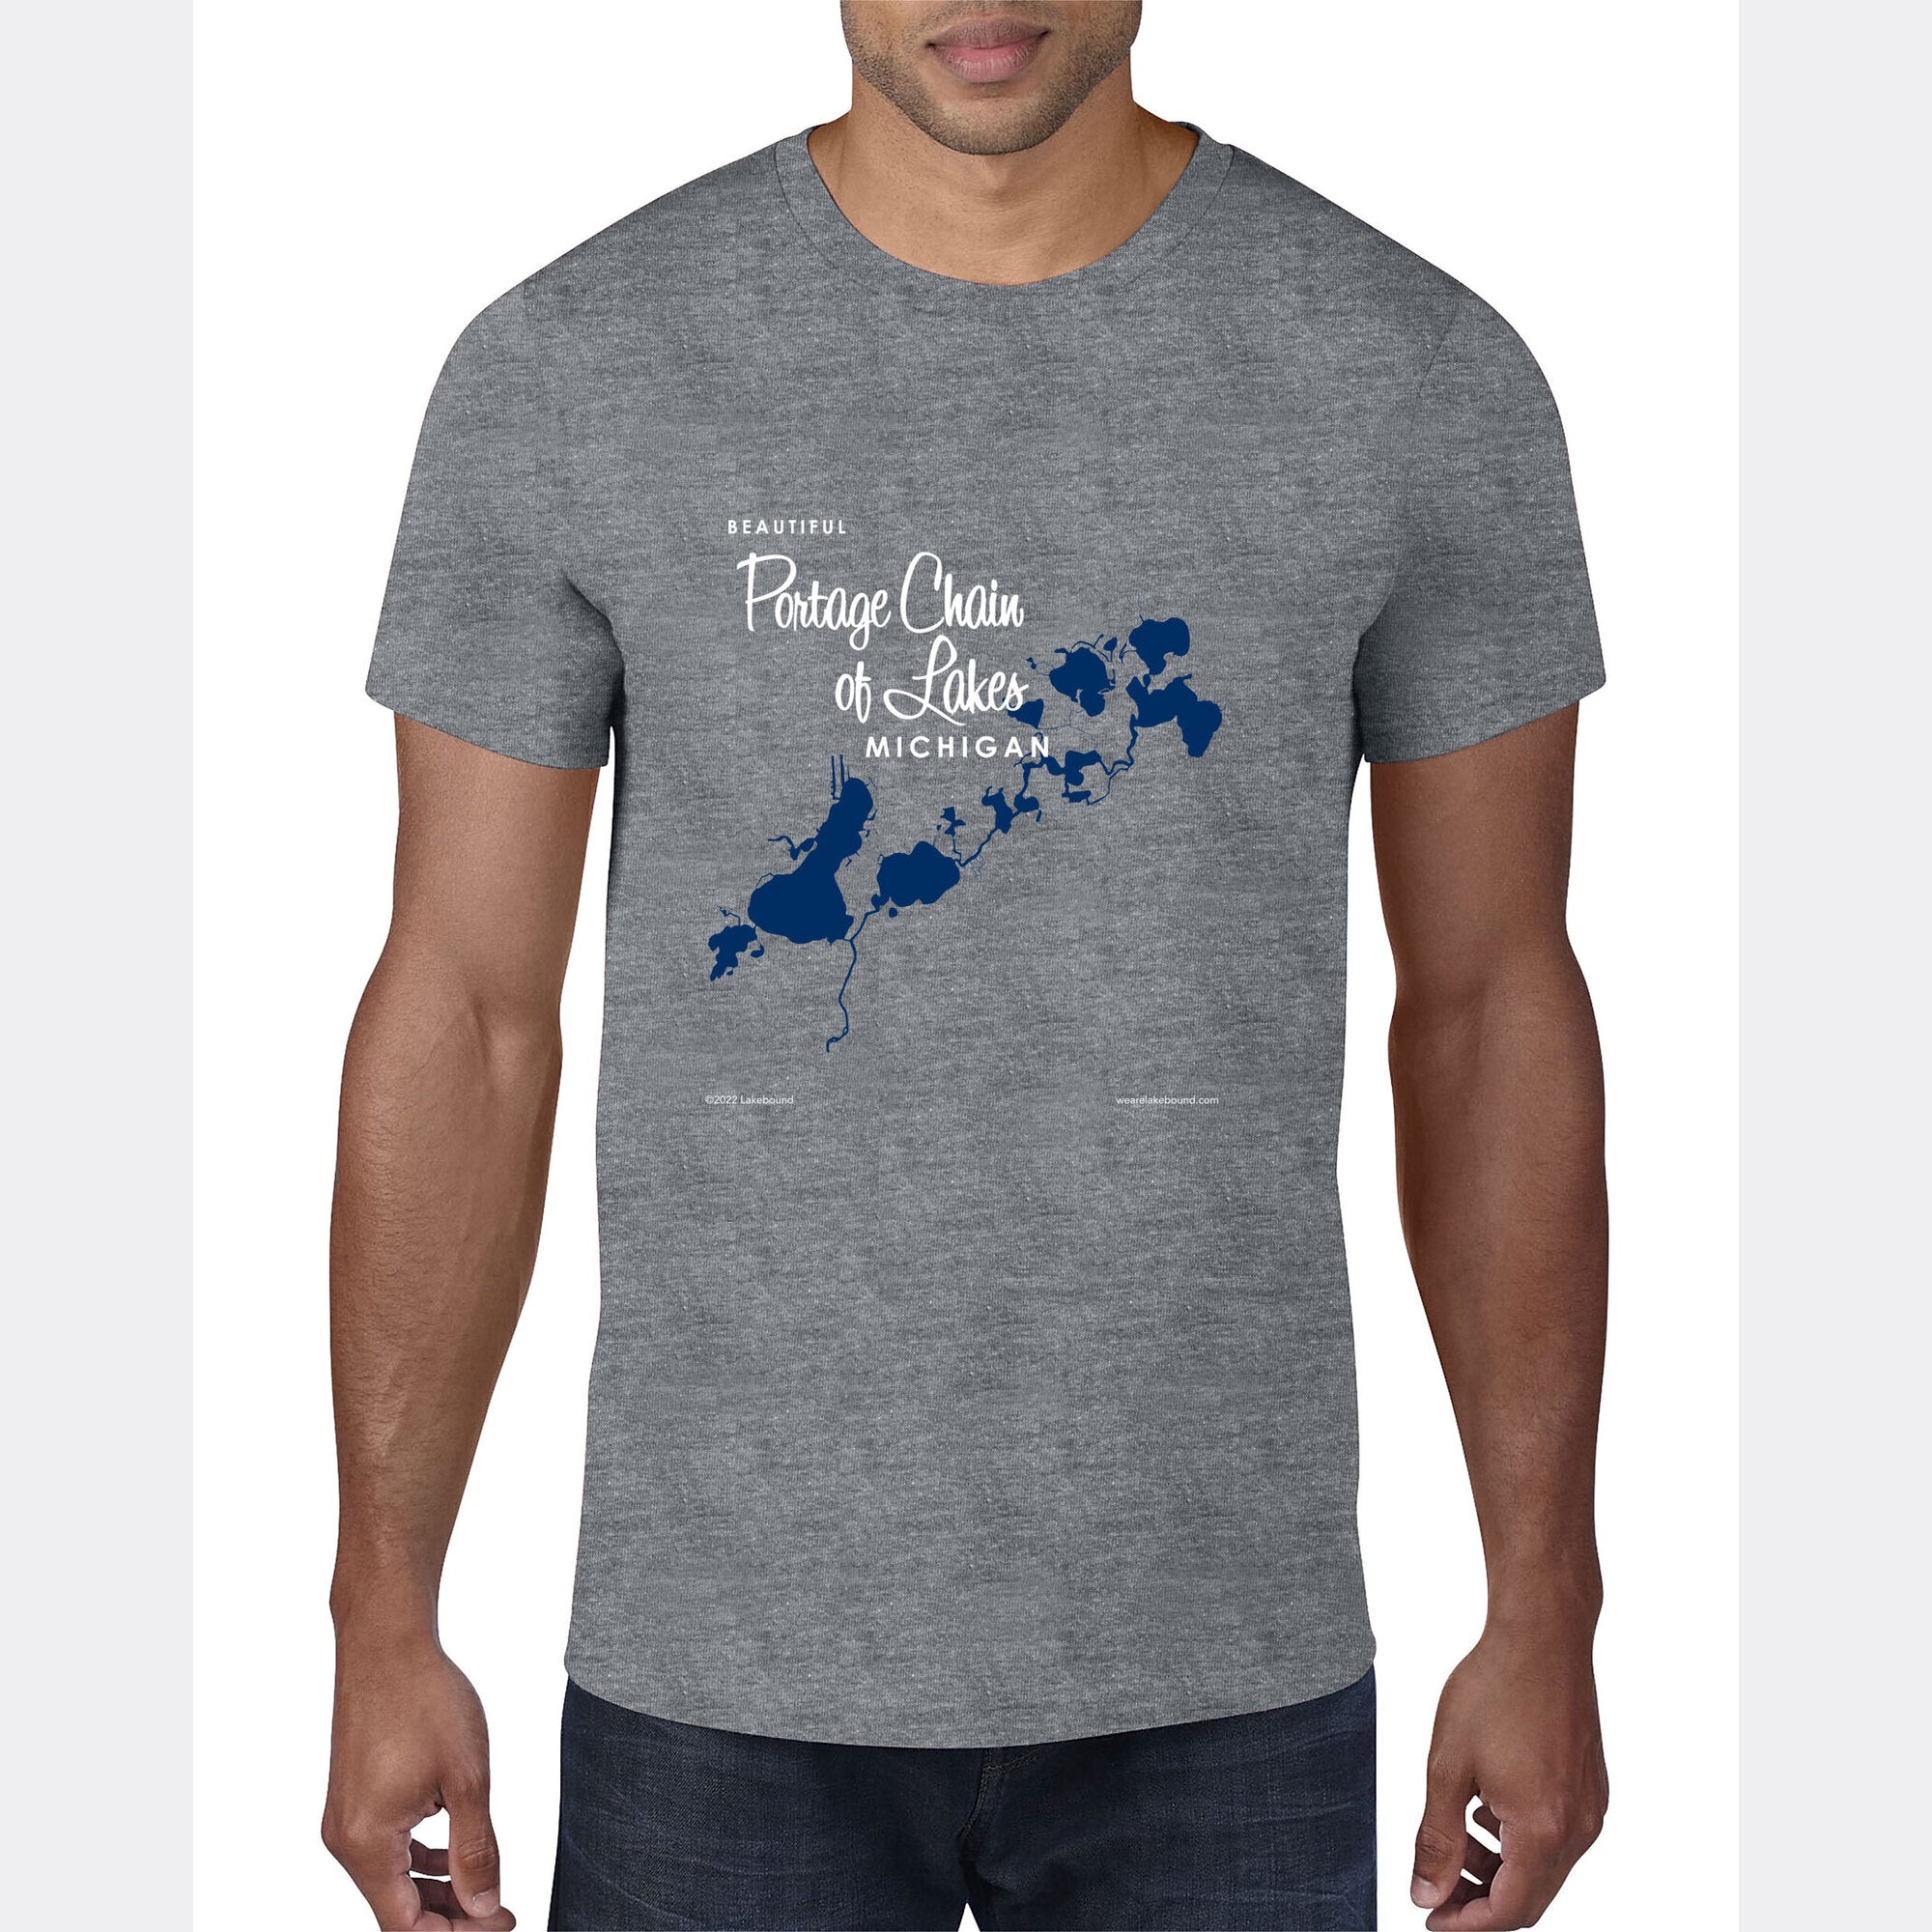 Portage Chain of Lakes Michigan, T-Shirt